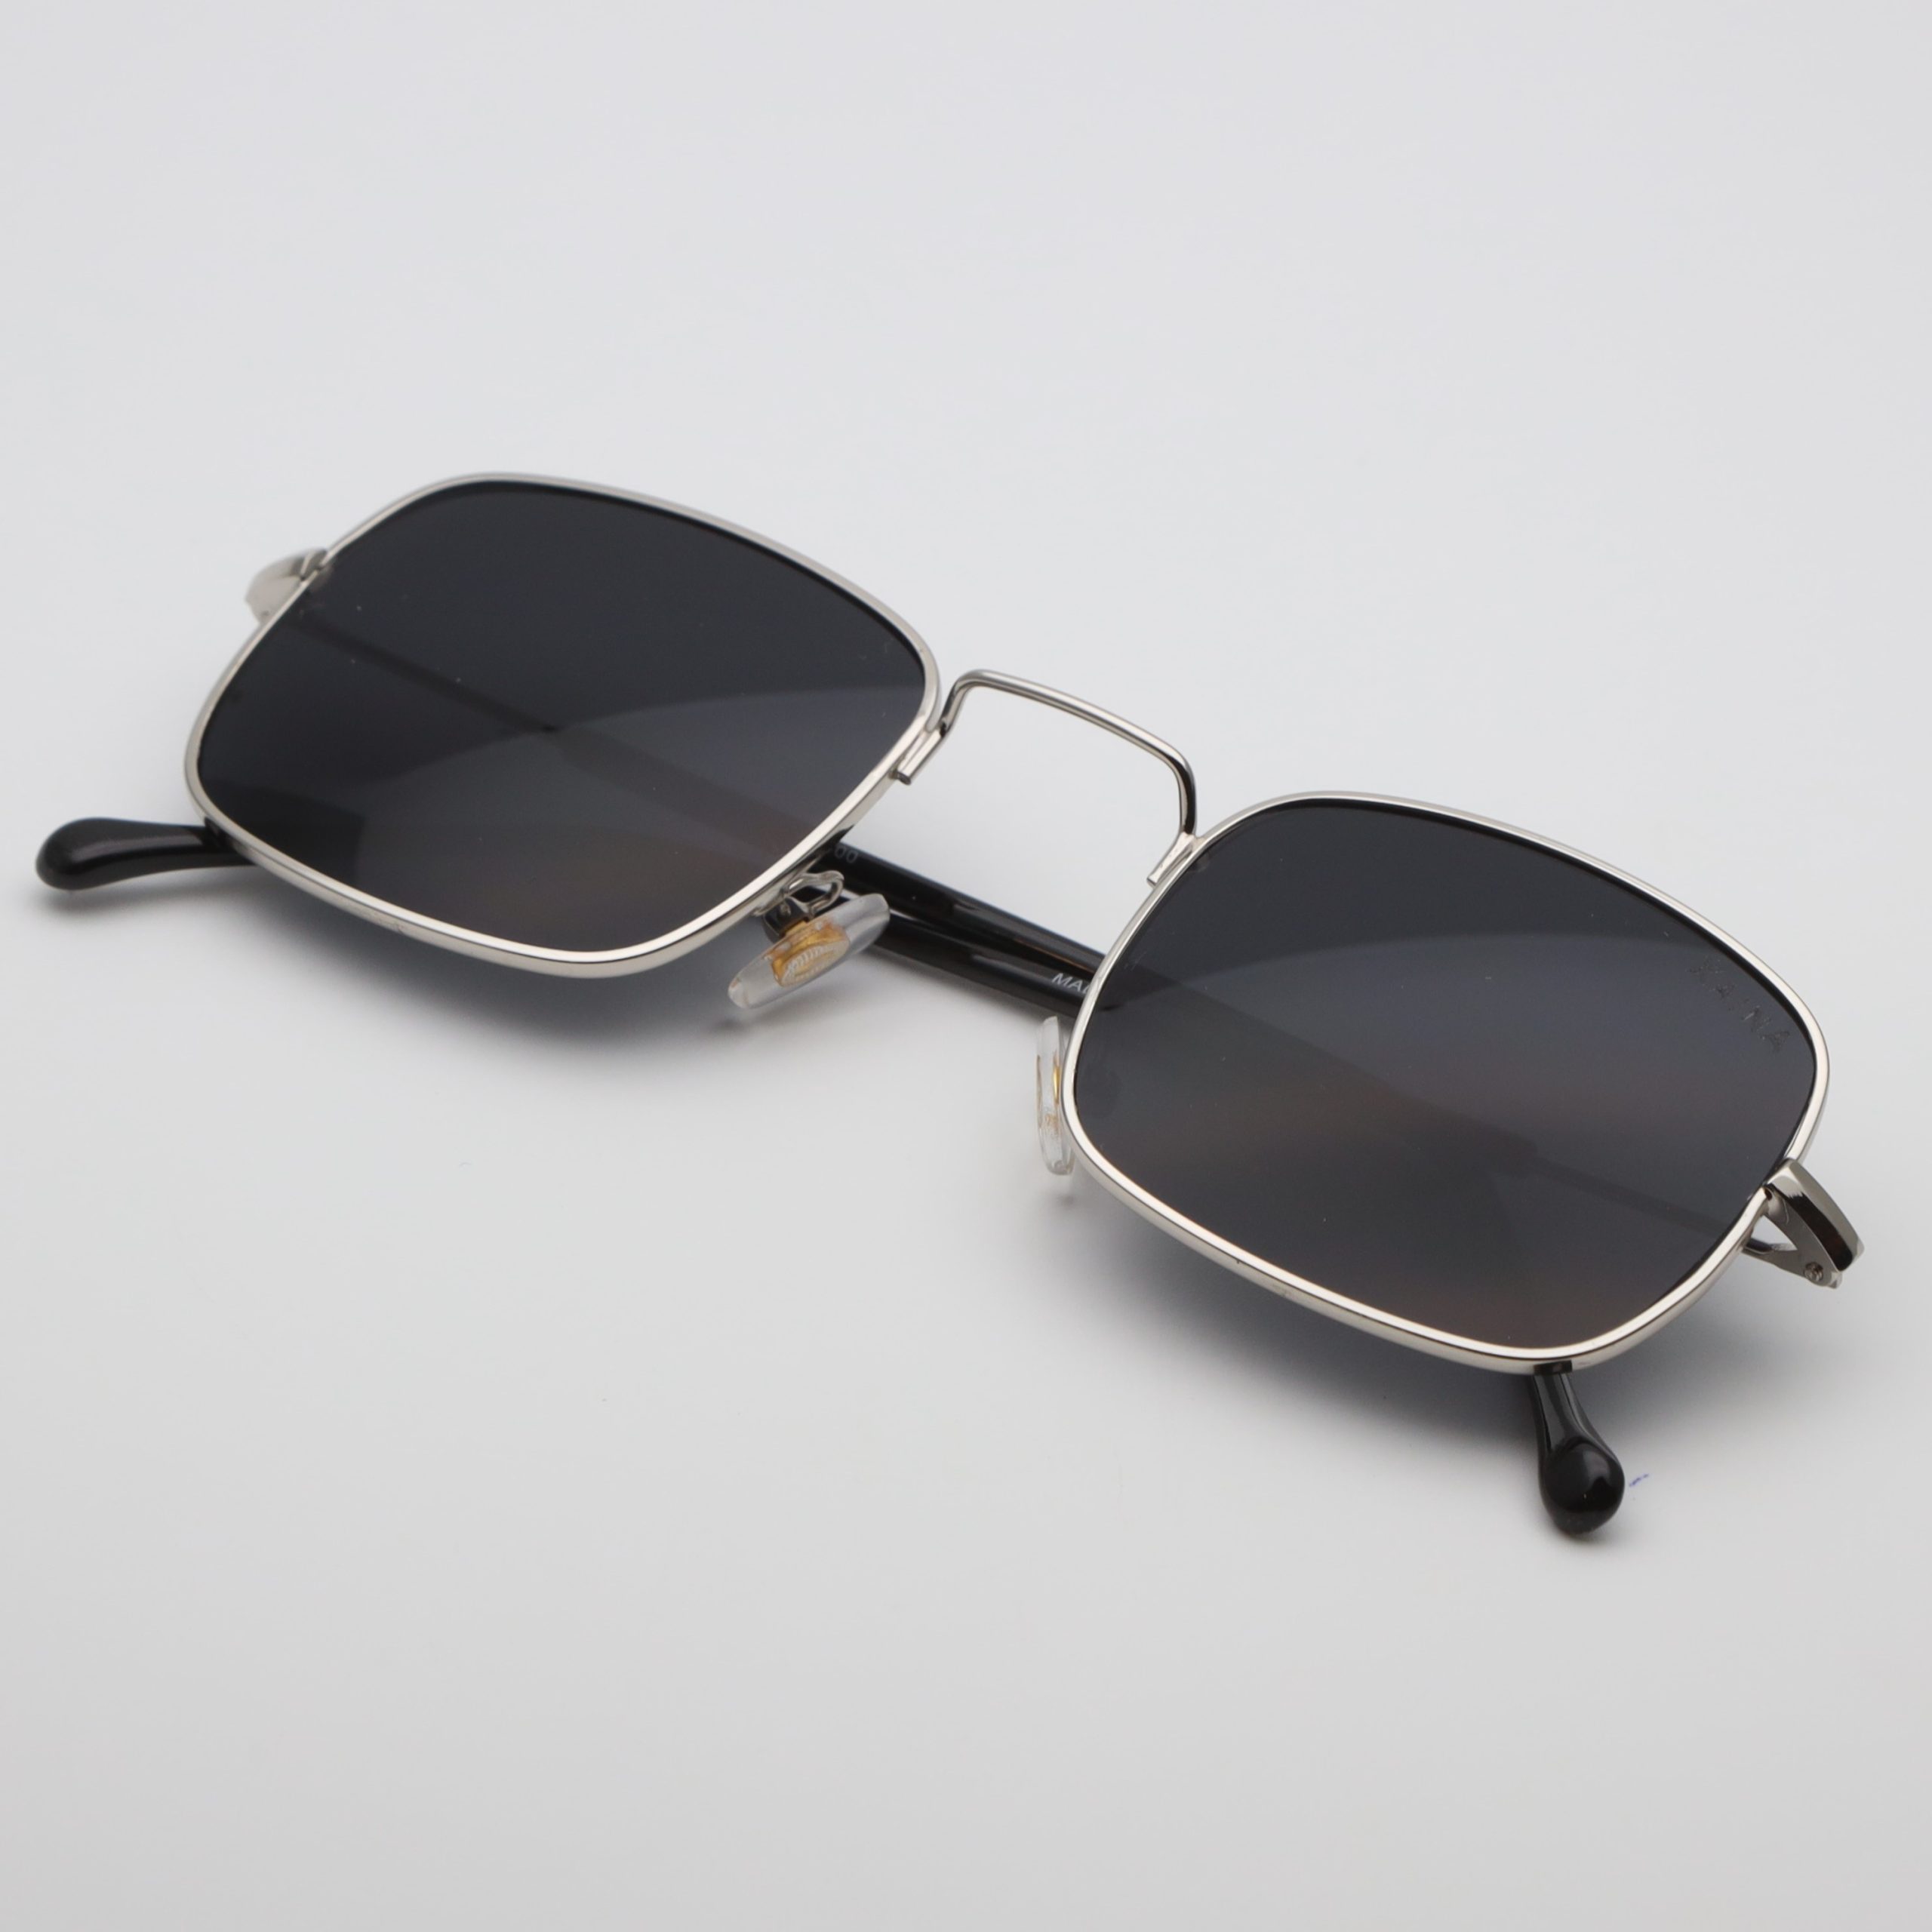 Small Square Women's Sunglasses Frame / Vintage Alloy SunGlasses